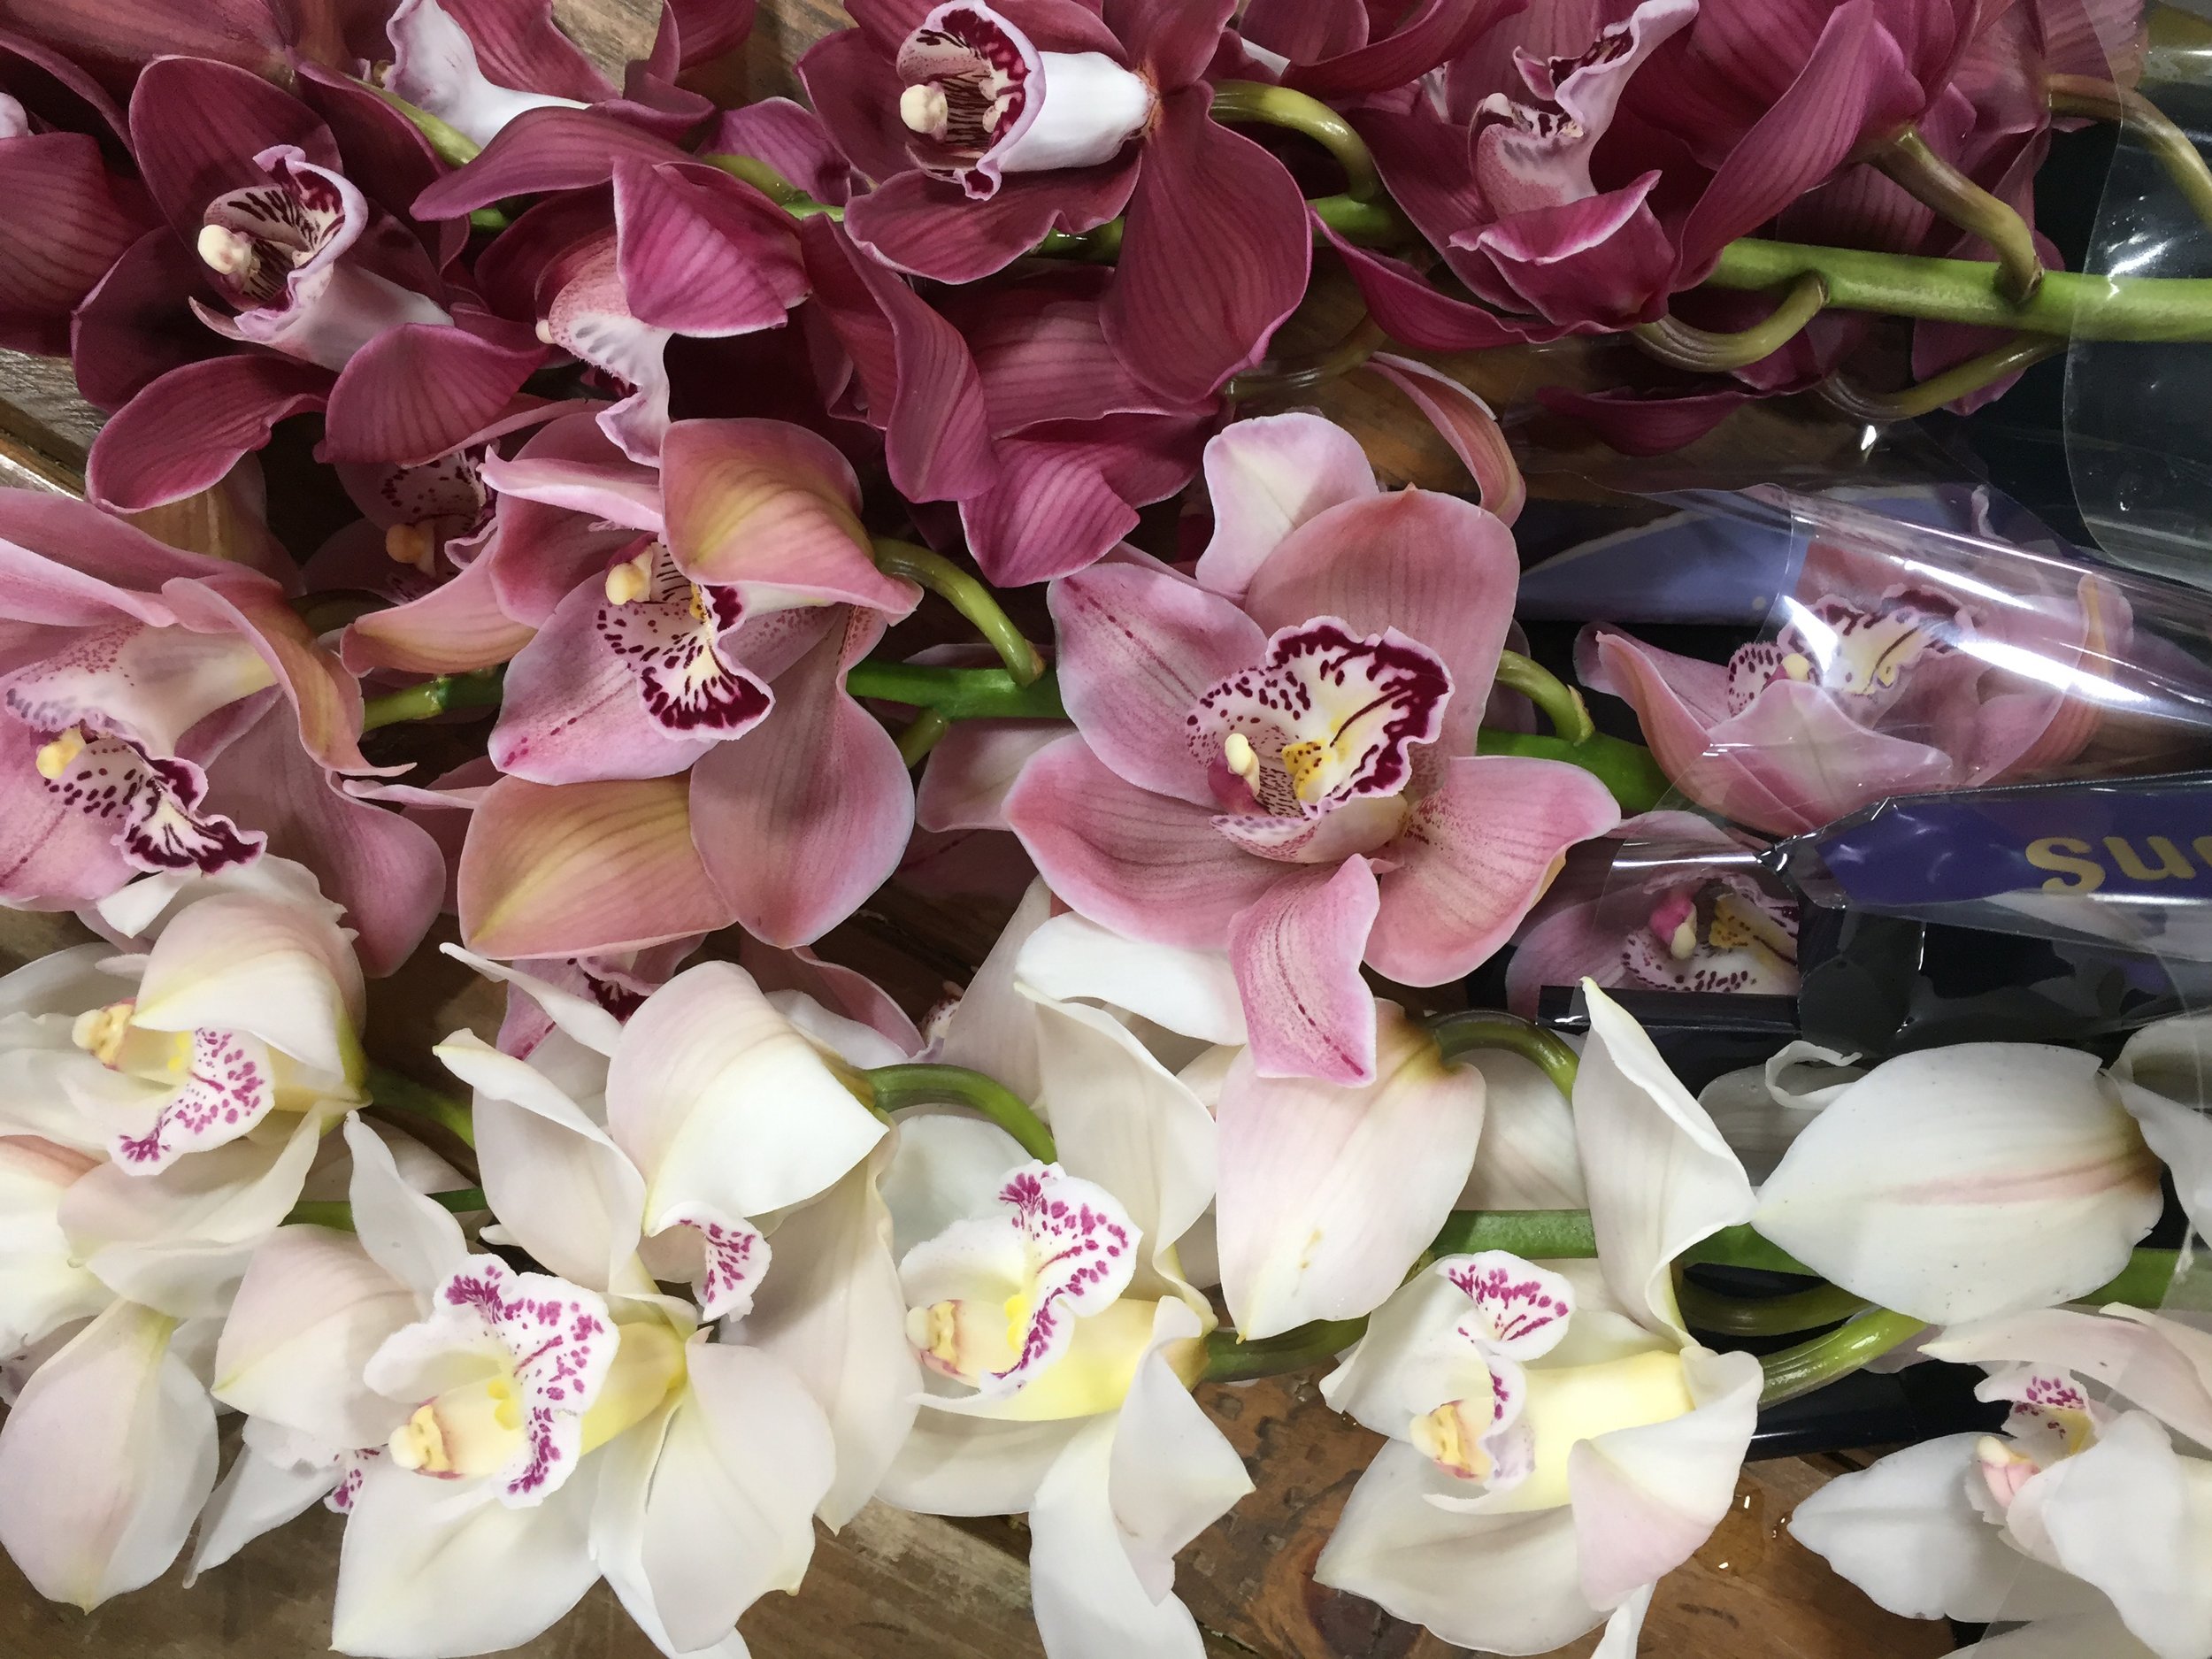 wholesale-cymbidium-orchids-in-bulk-orlando.jpg